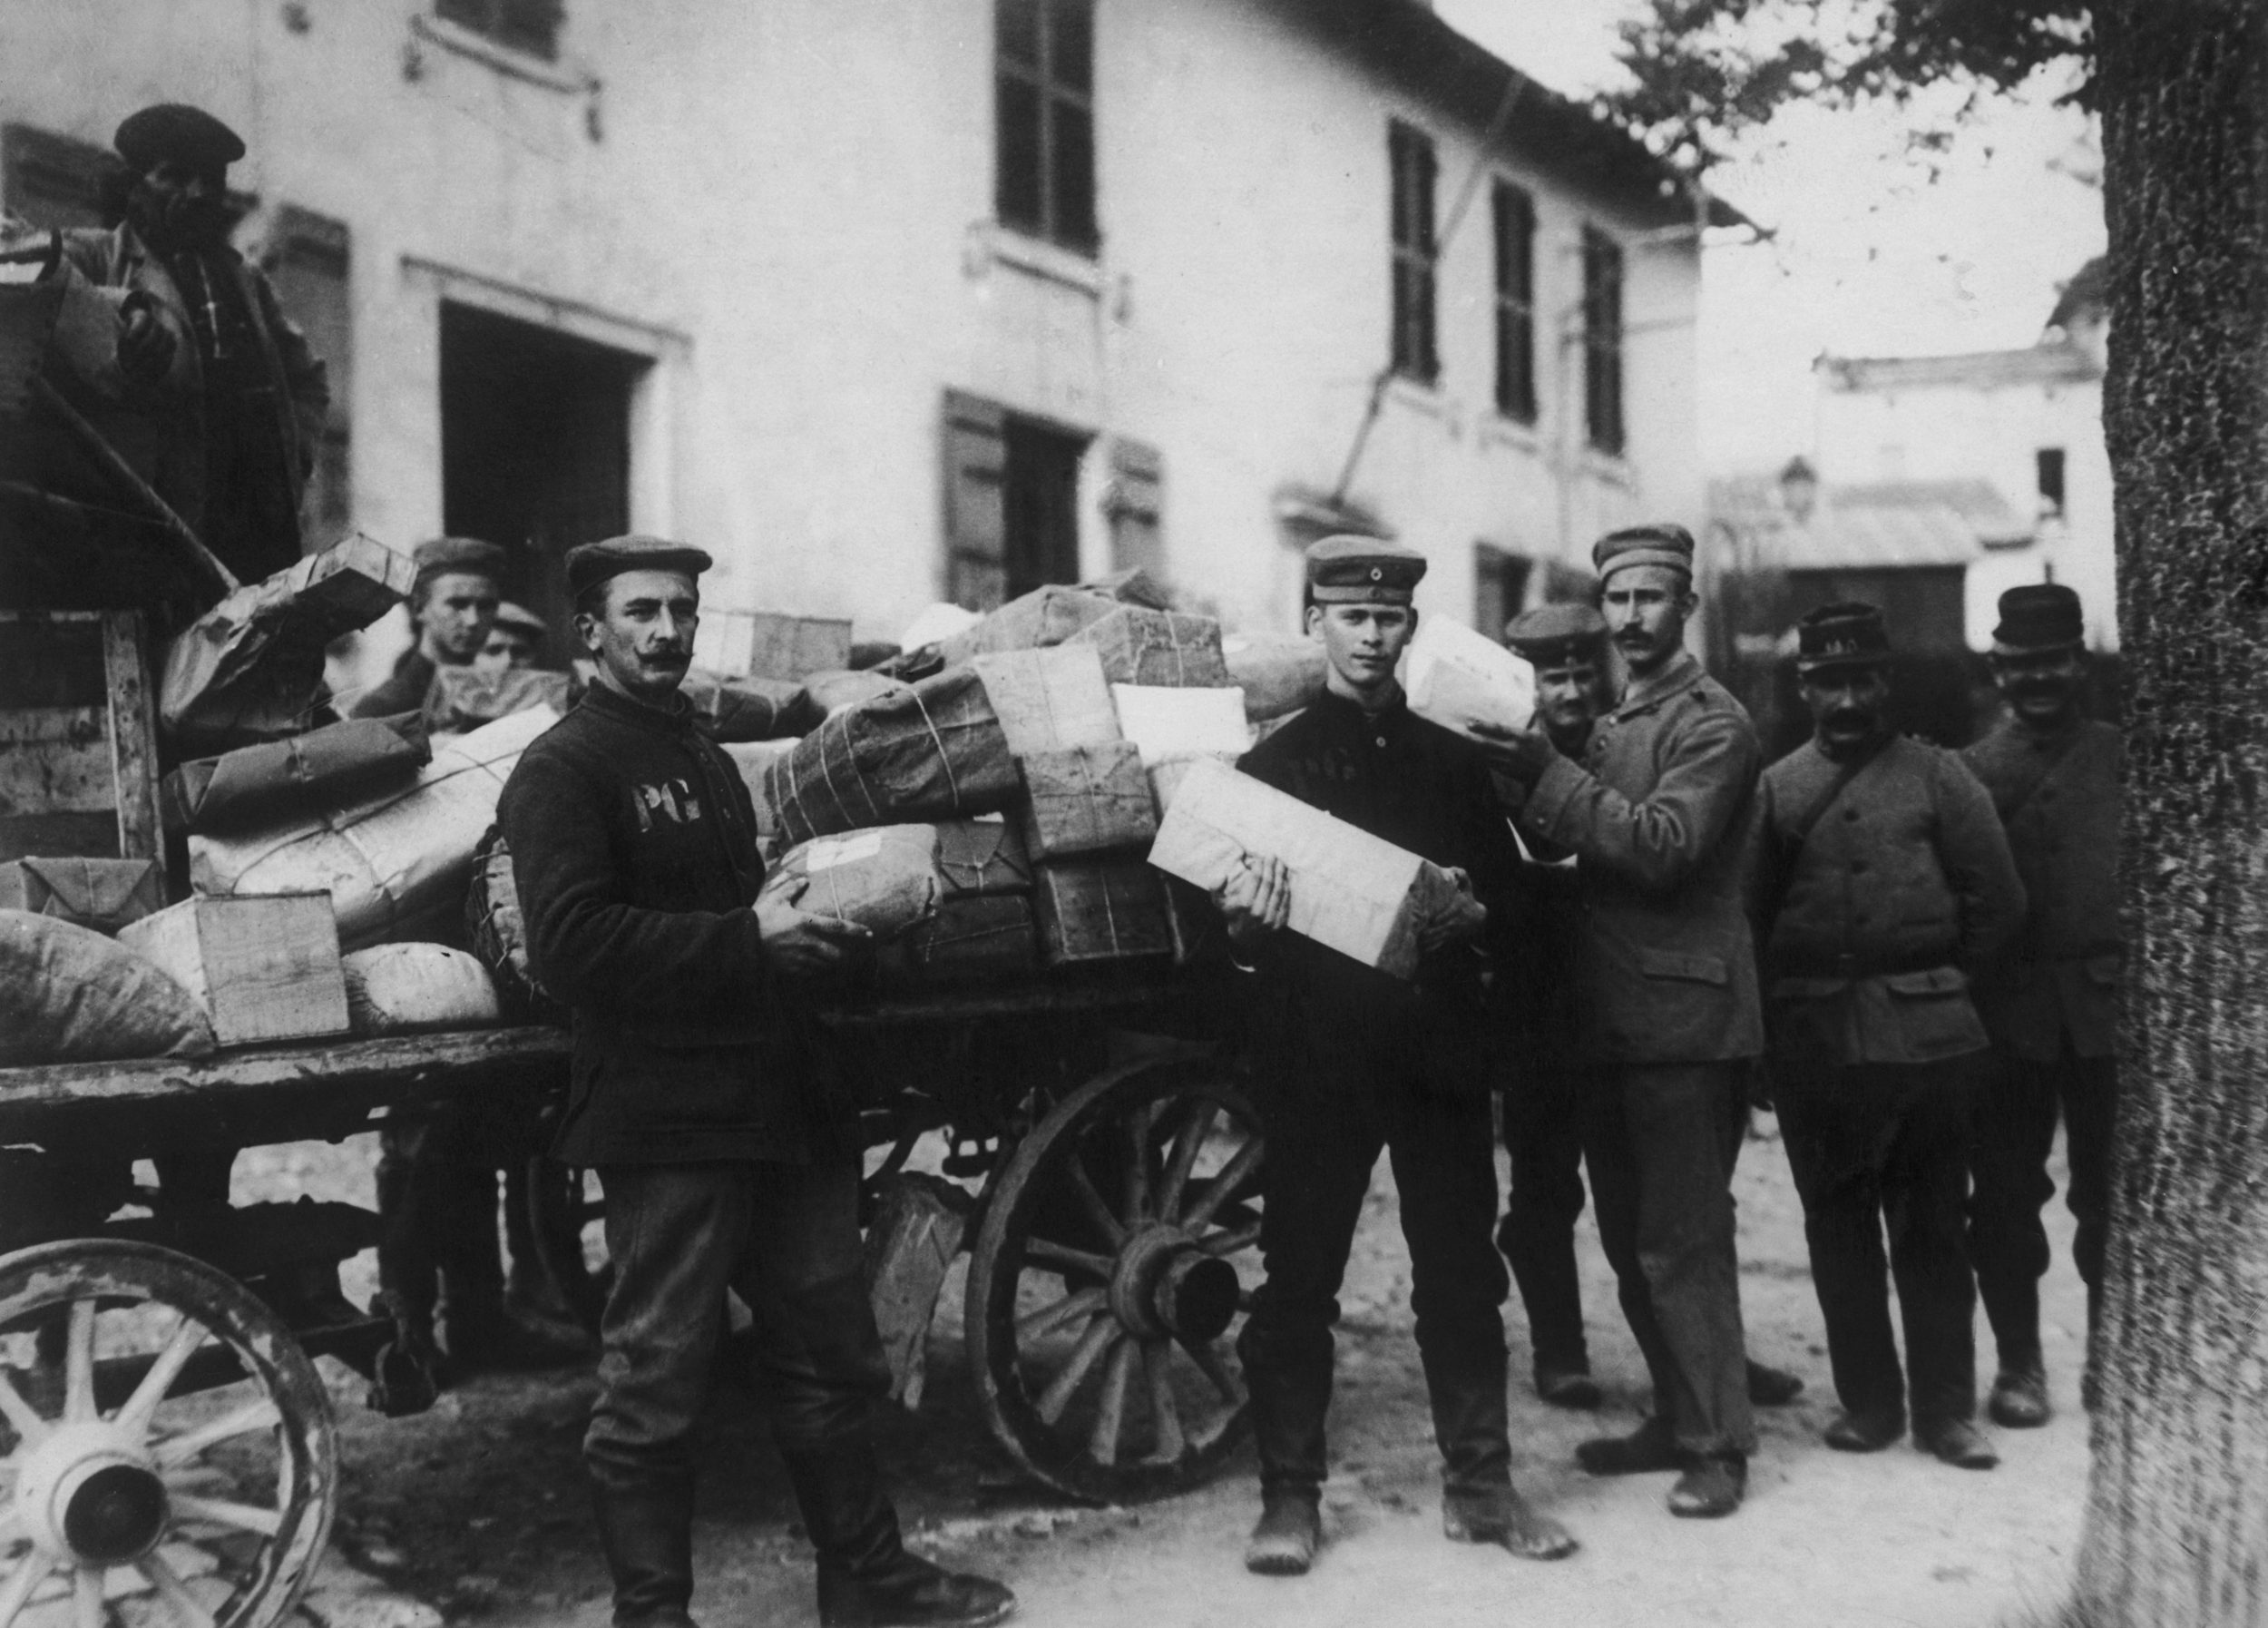 Prisoners sort mail during World War II.